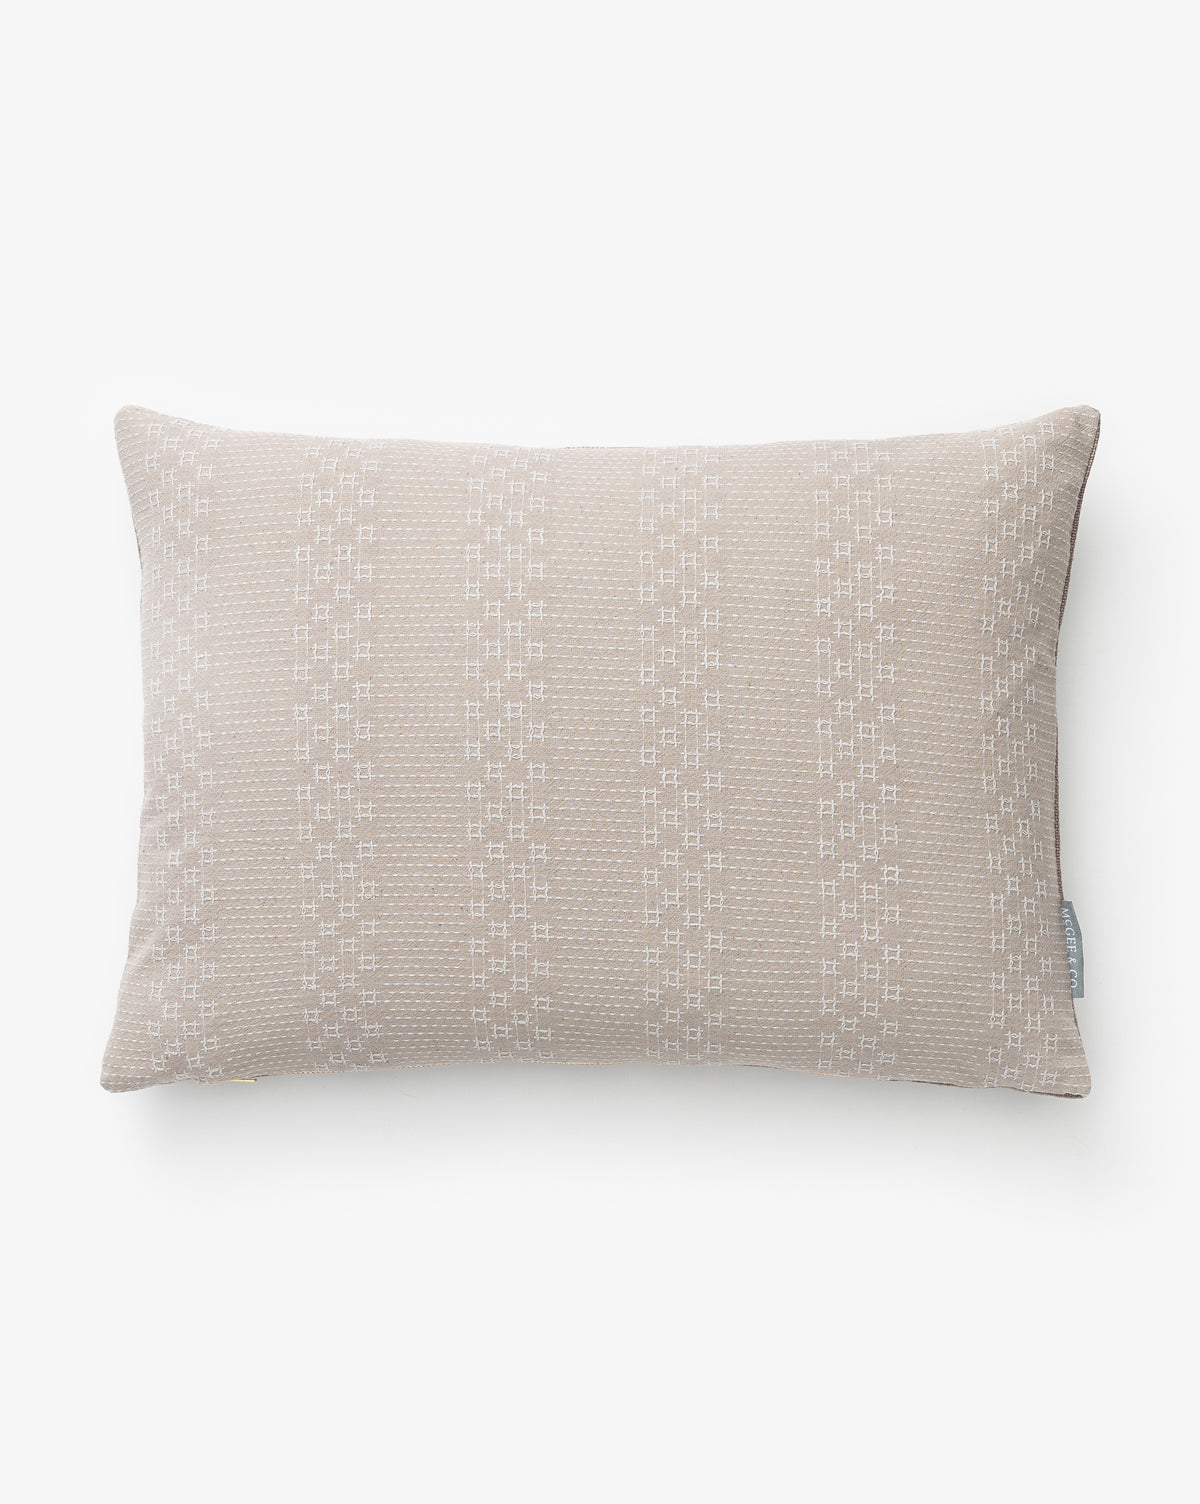 Tangren, Vintage Gray Crosshatch Pillow Cover No. 4